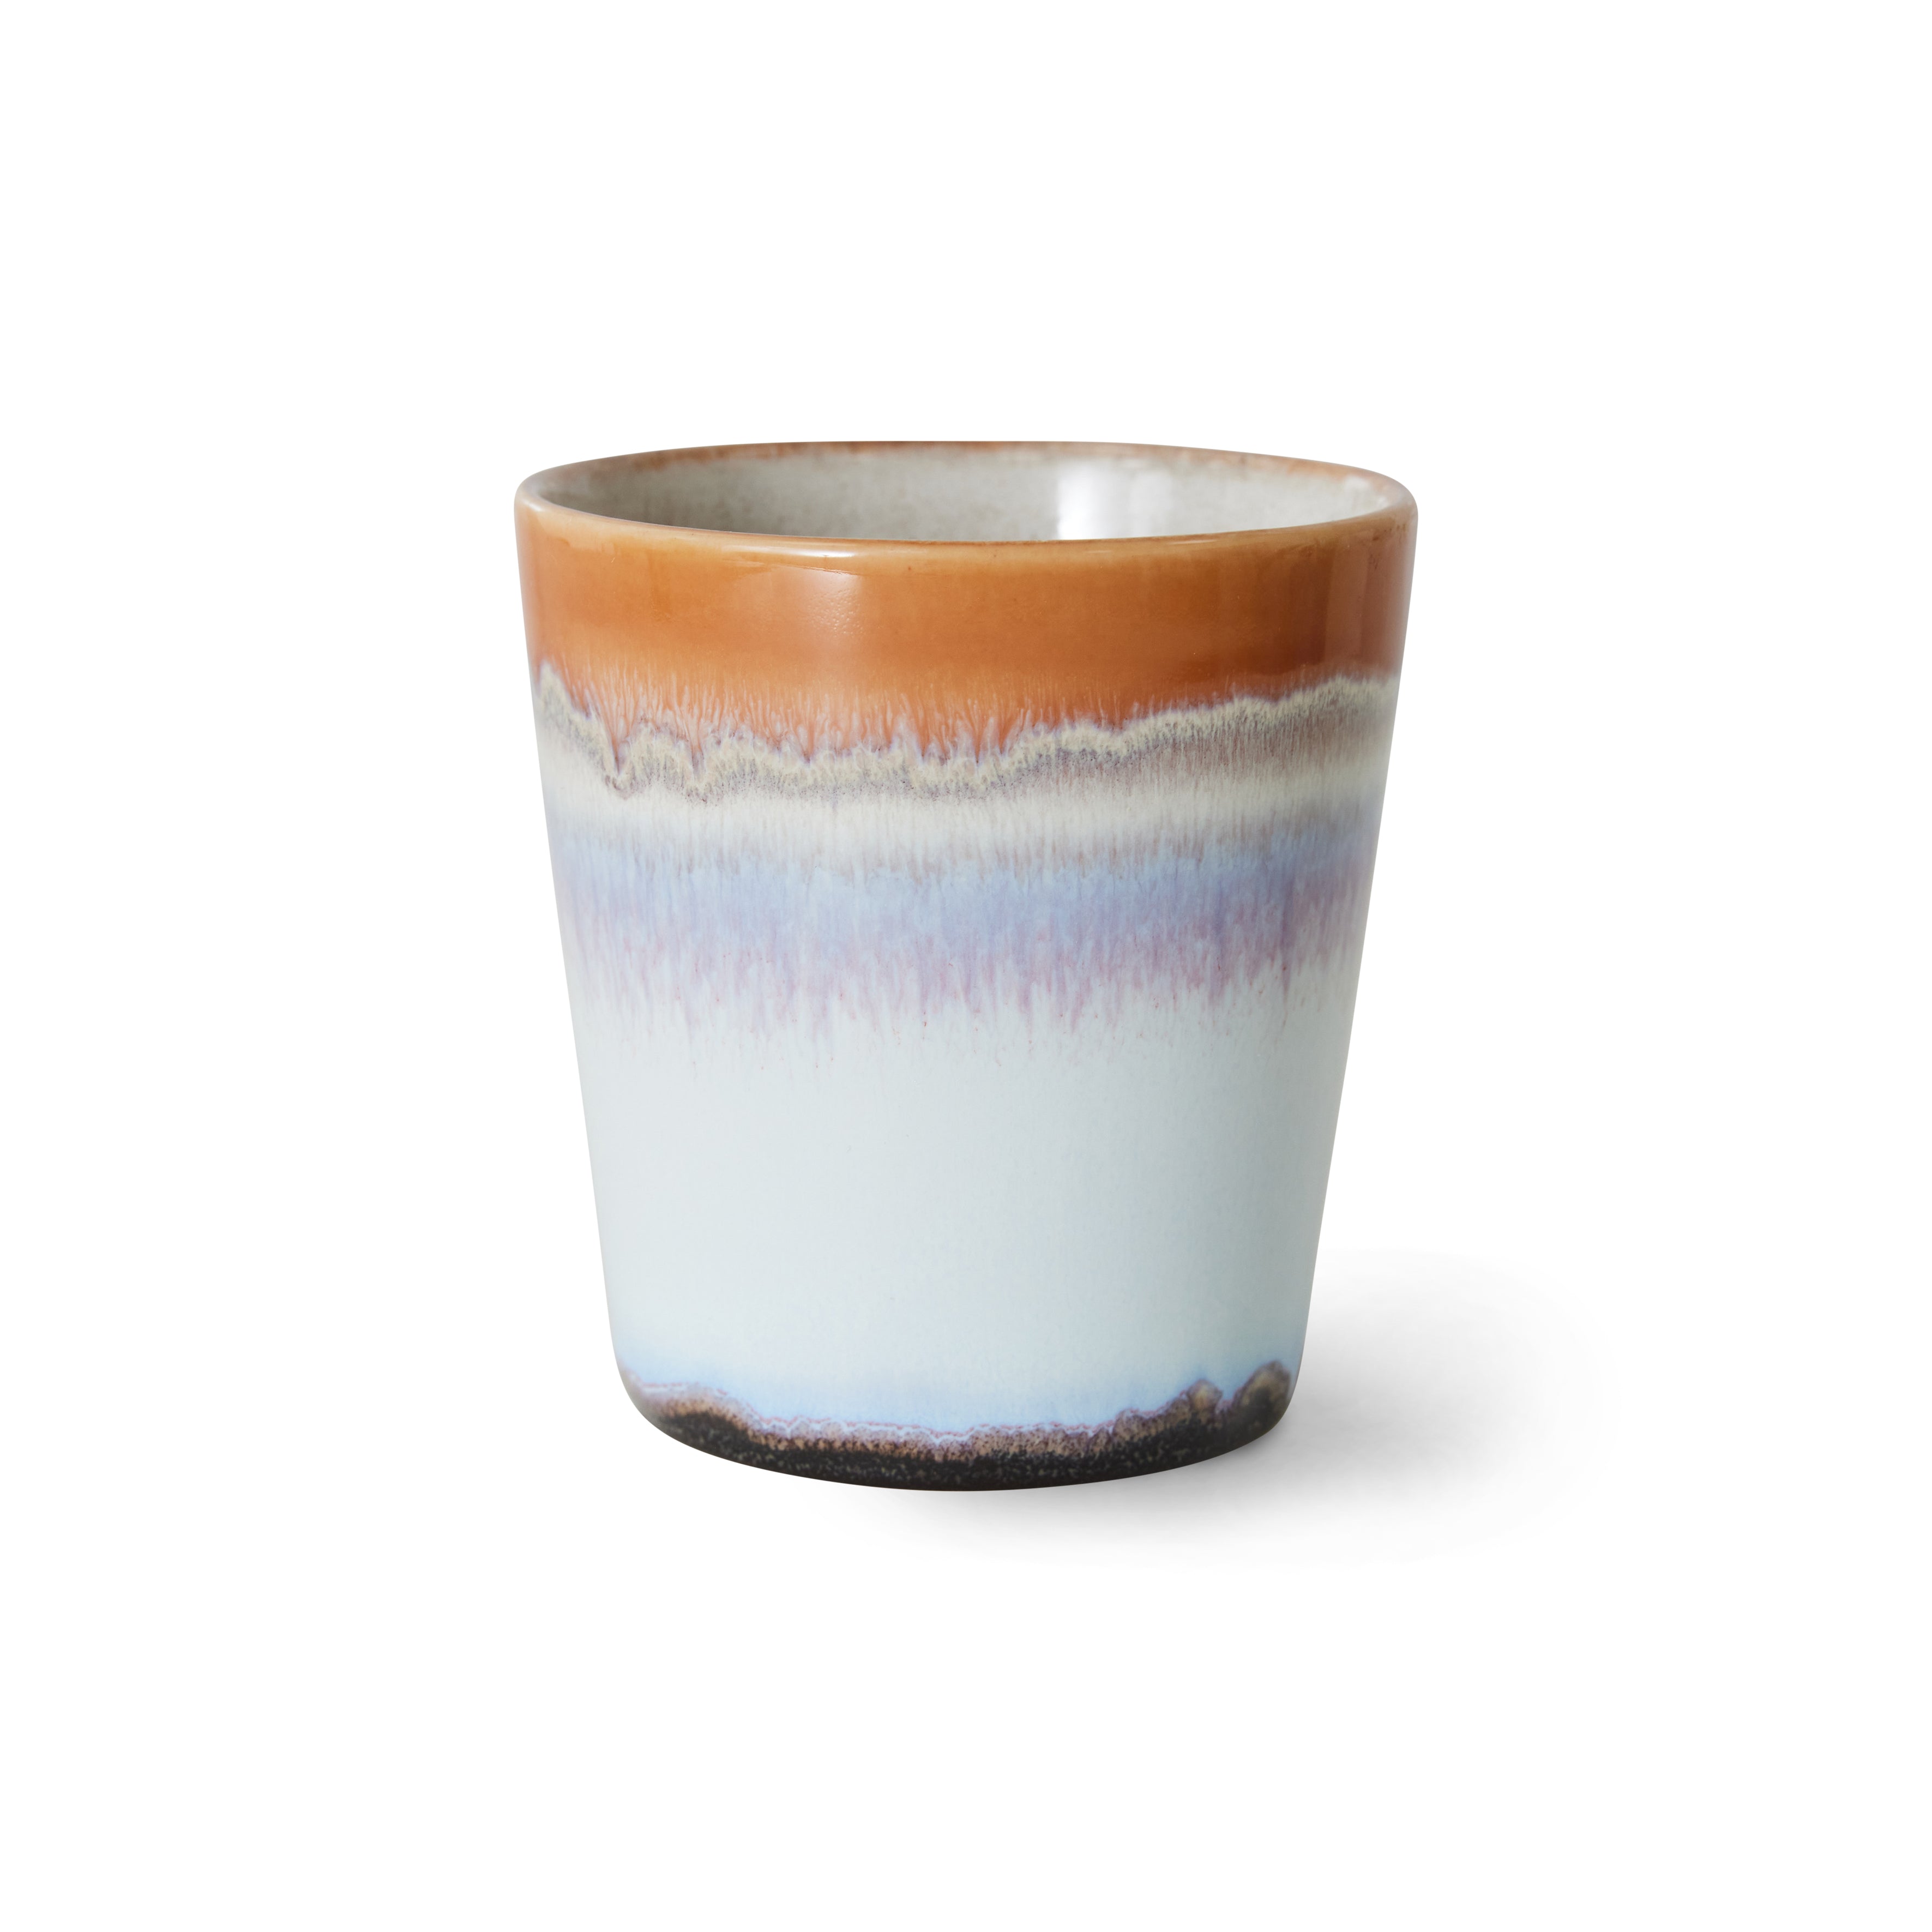 70s ceramics: coffee mug, ash